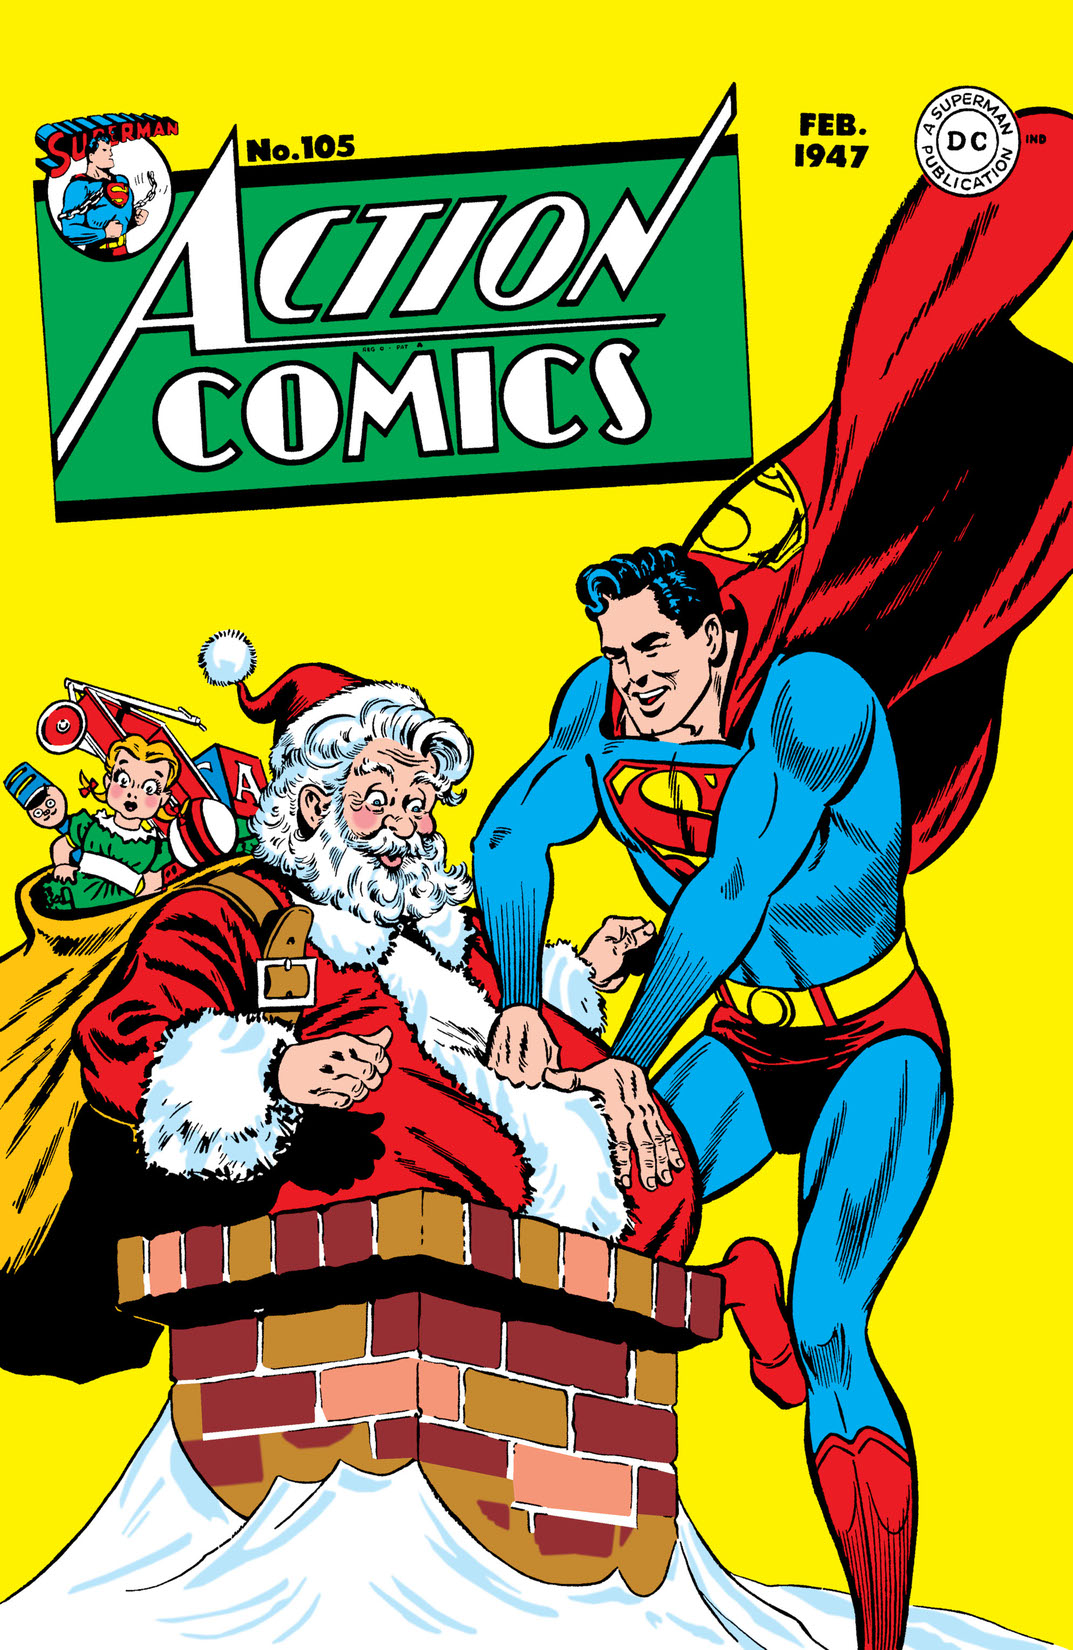 Action Comics (1938-) #105 preview images